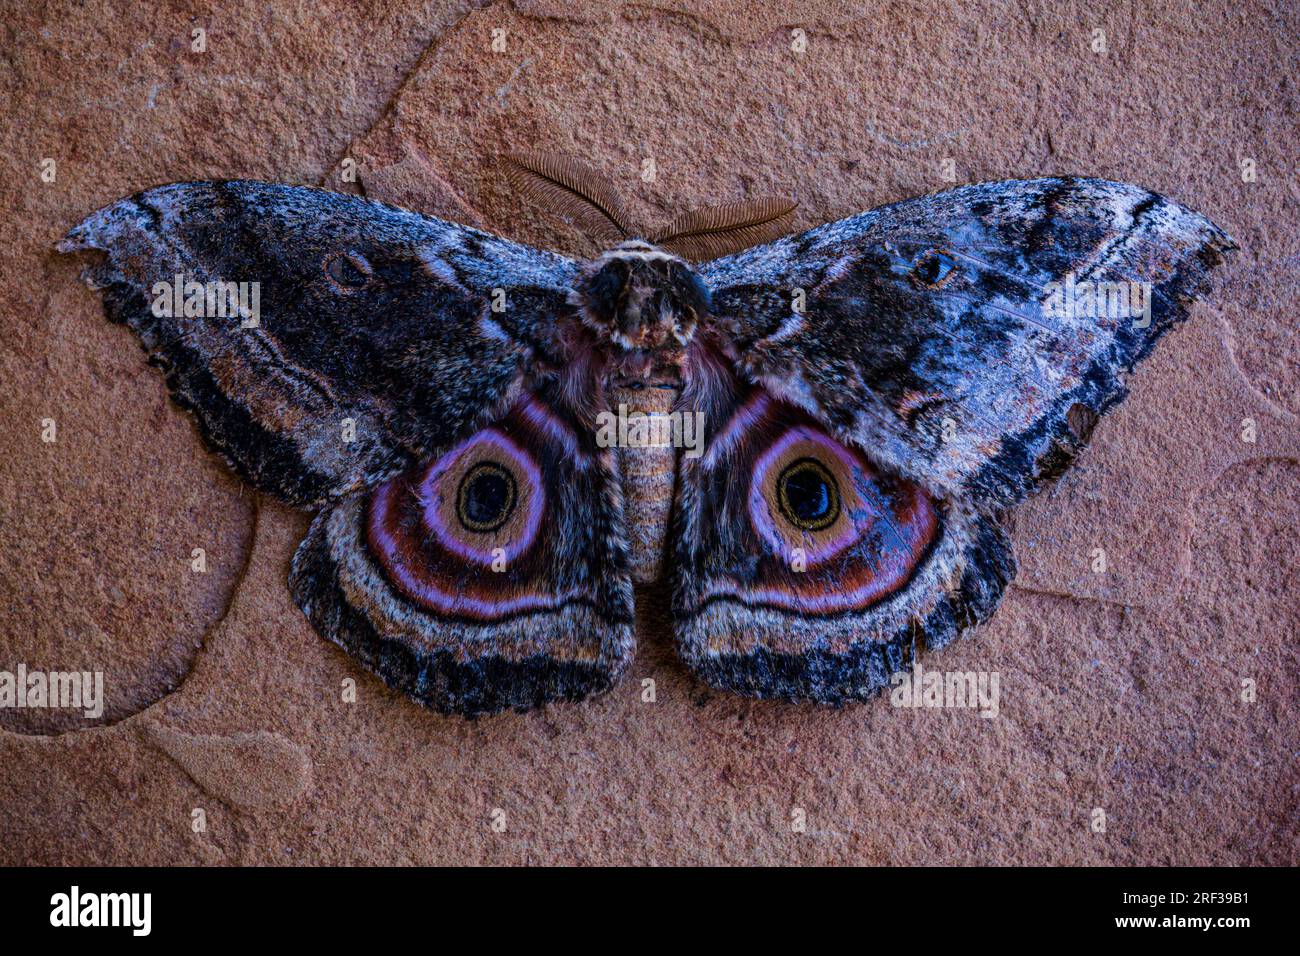 Realistic Paper Luna Moth, Double-sided, Faux Butterfly Papercut